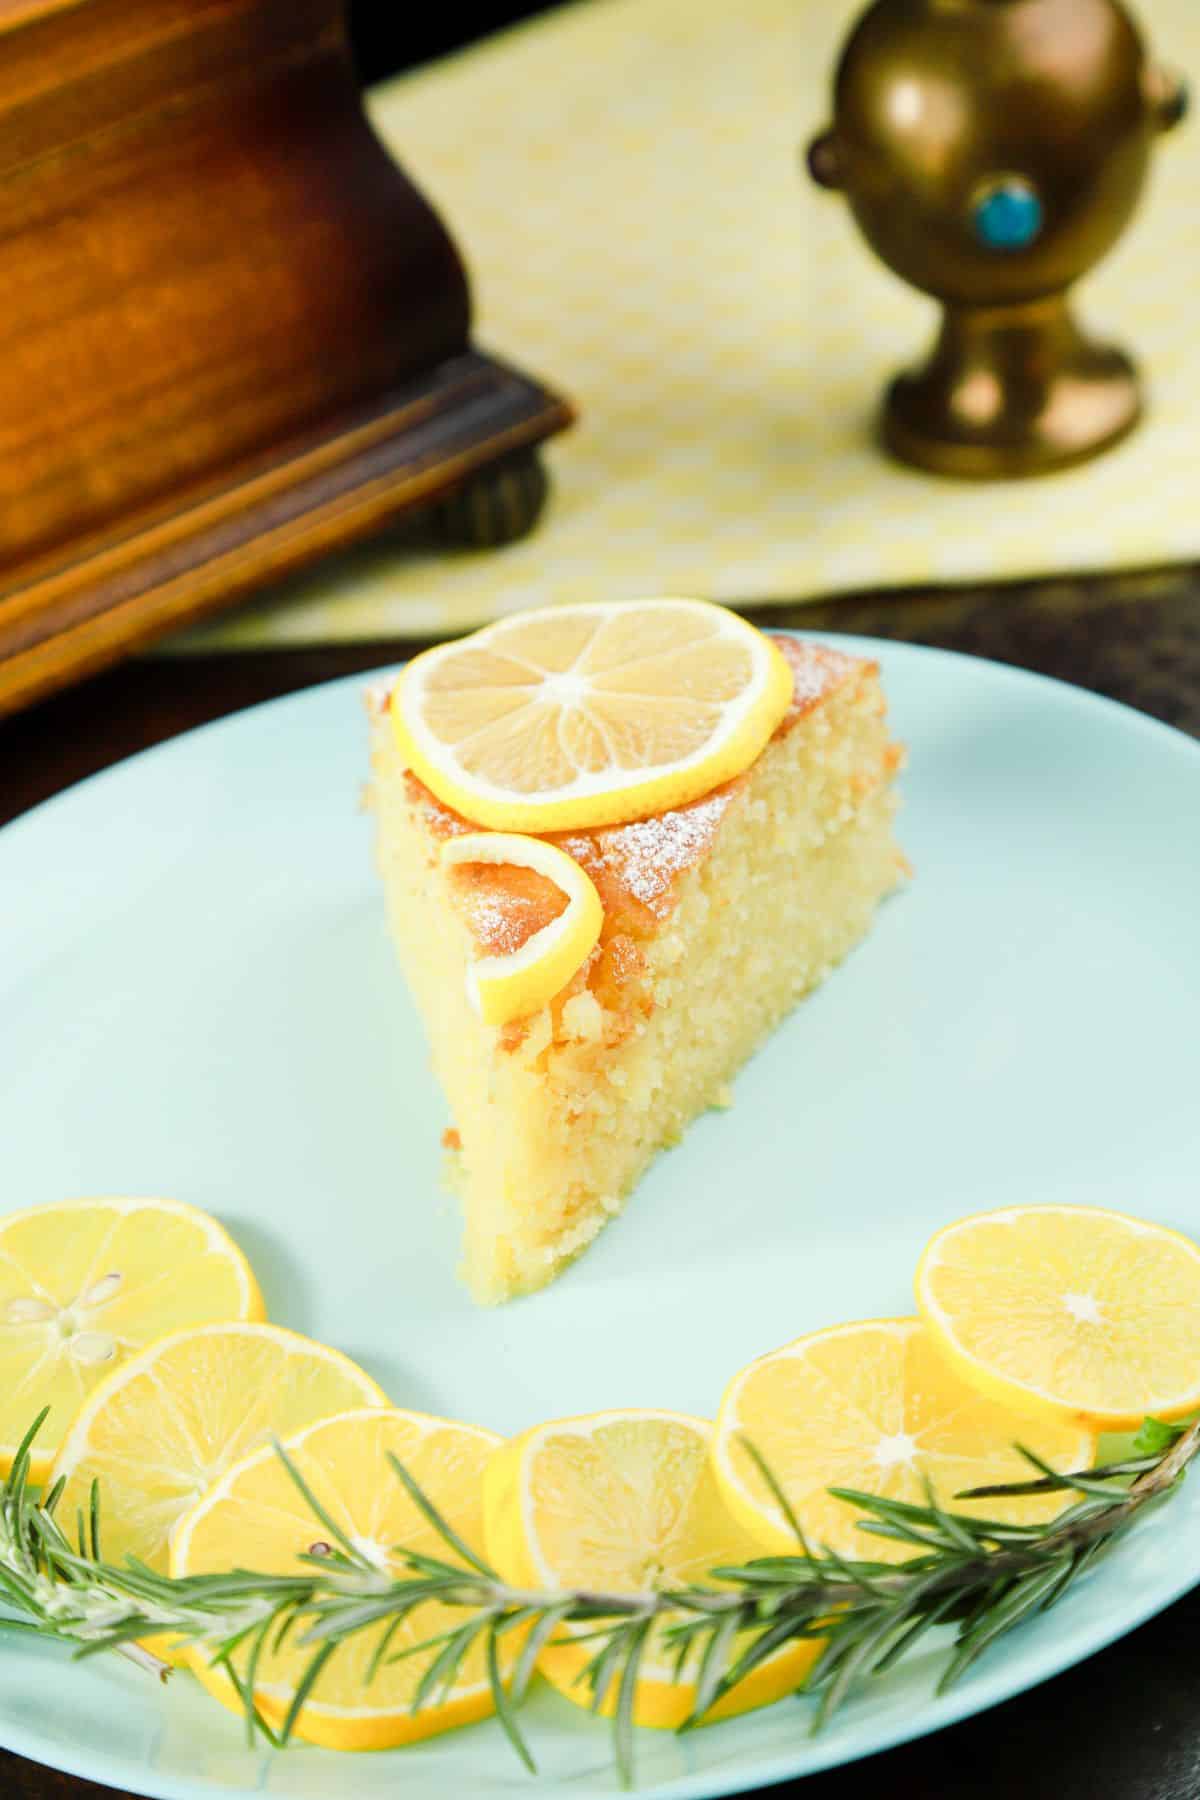 slice of cake on blue plate with lemon slizces